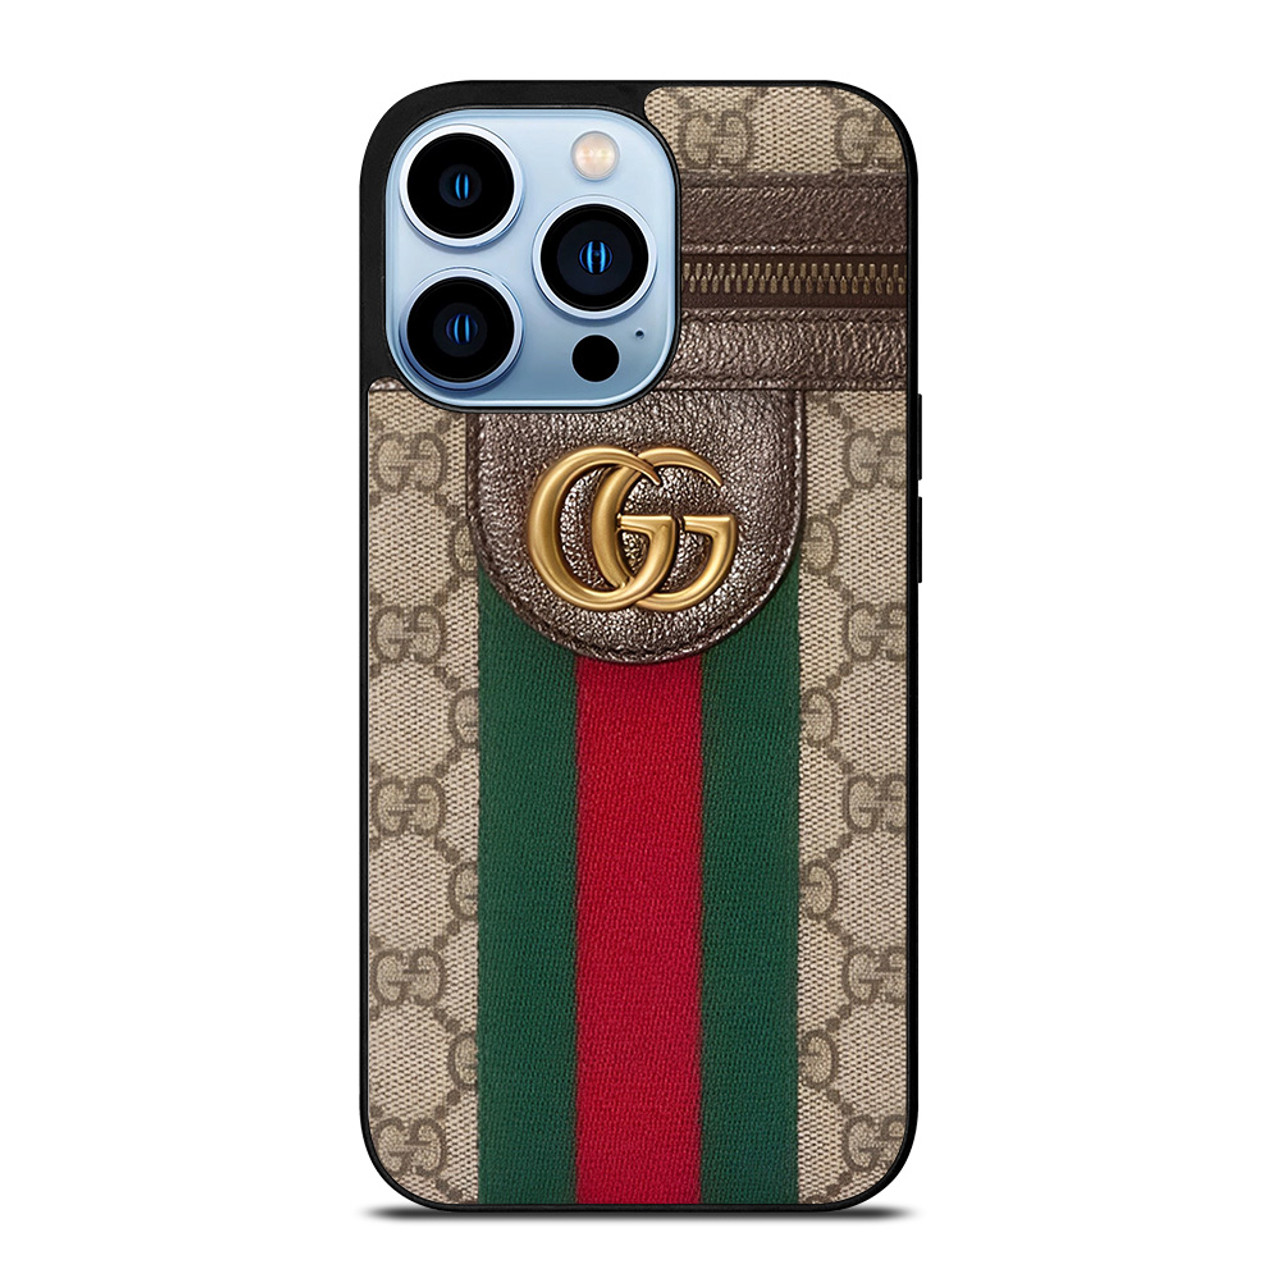 Gucci iPhone Case 13 Pro Max 